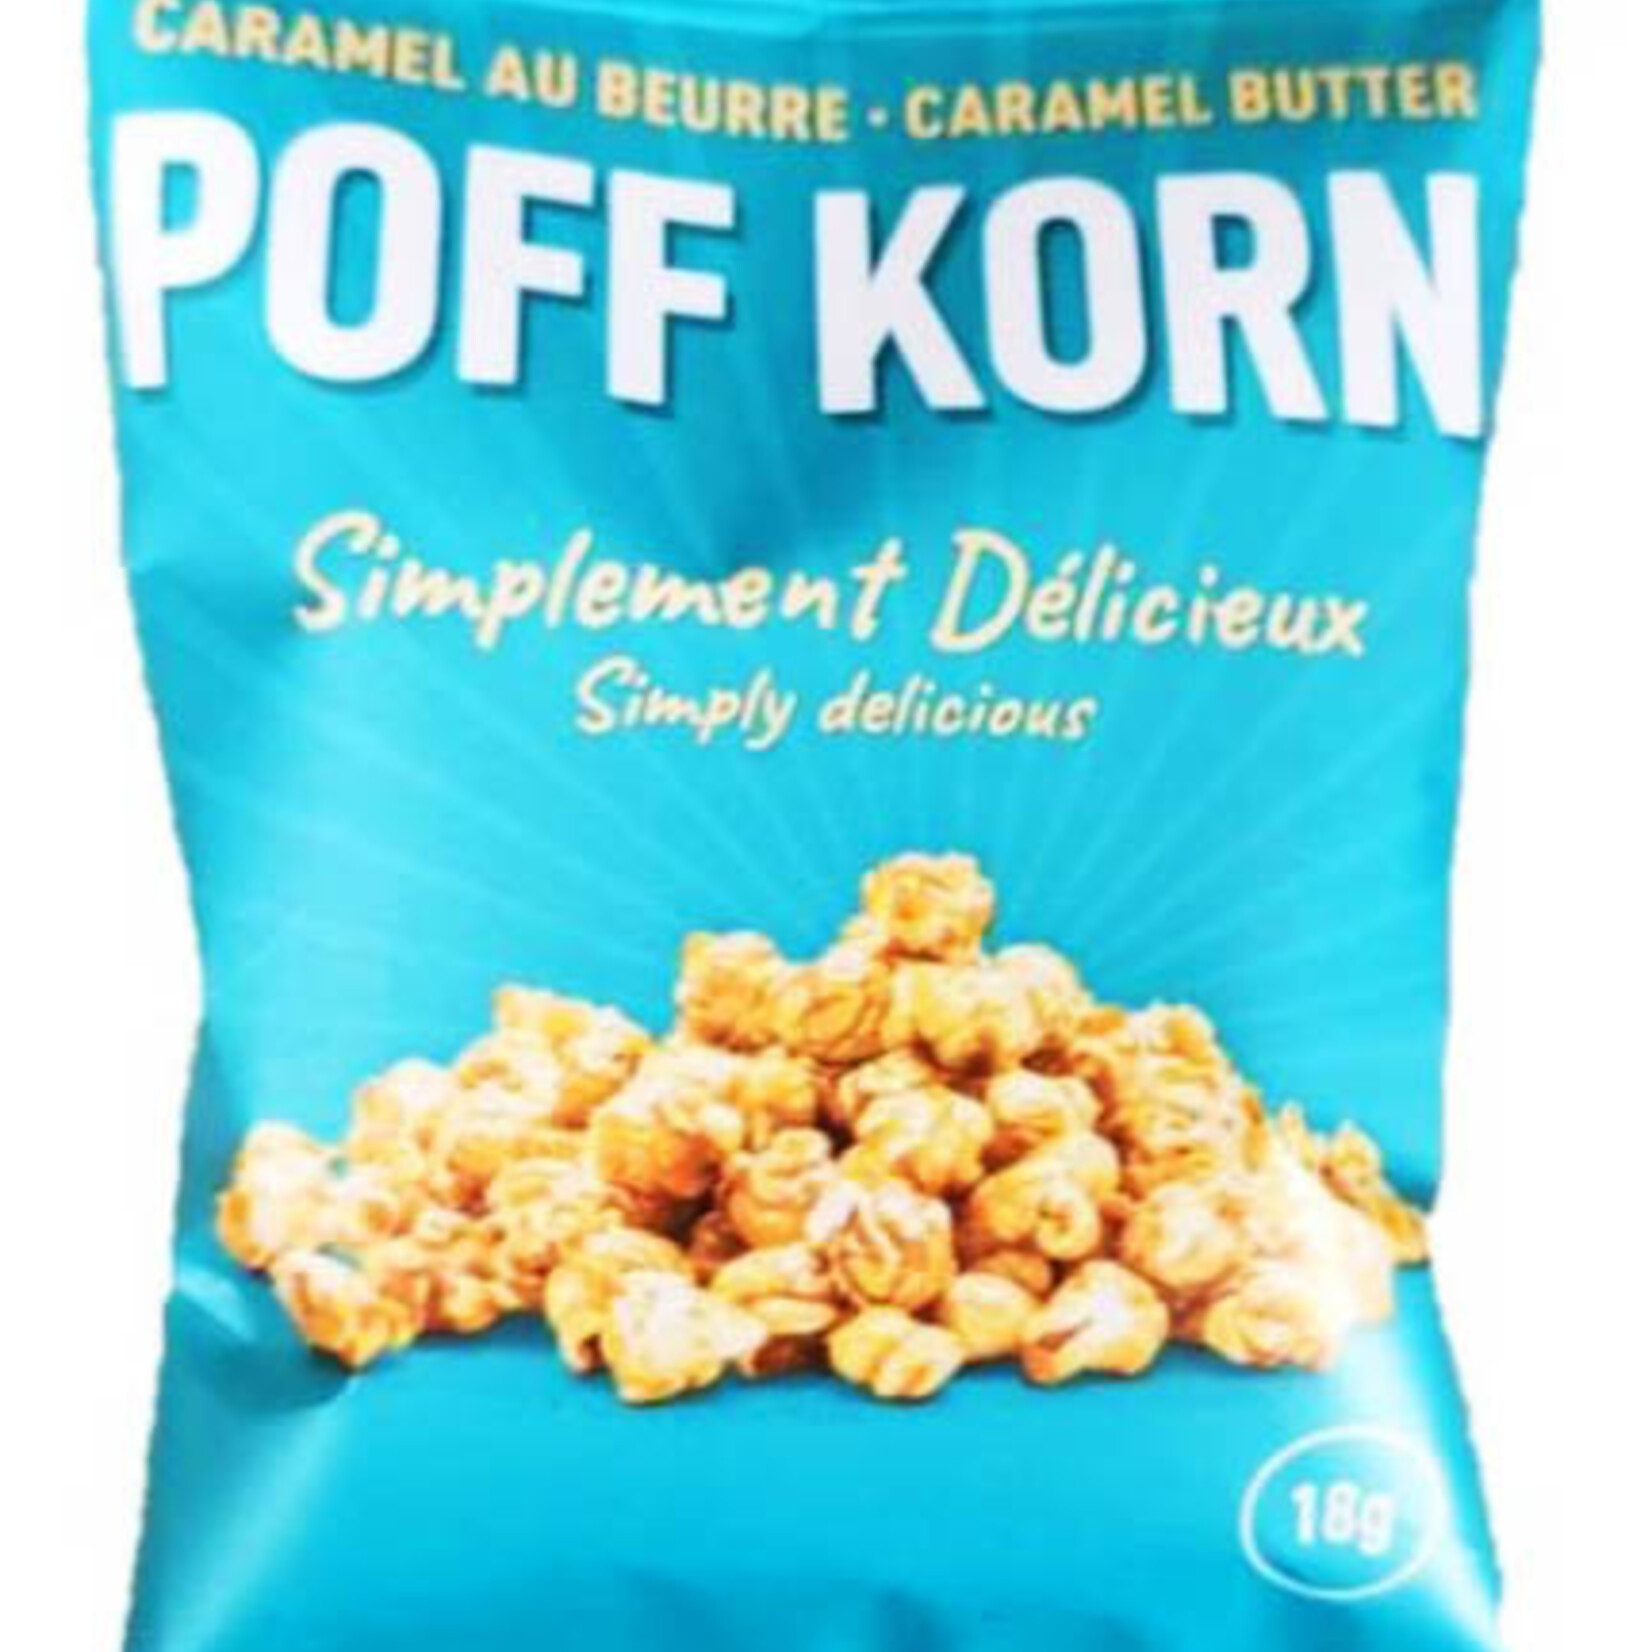 Poff Korn Caramel Popcorn